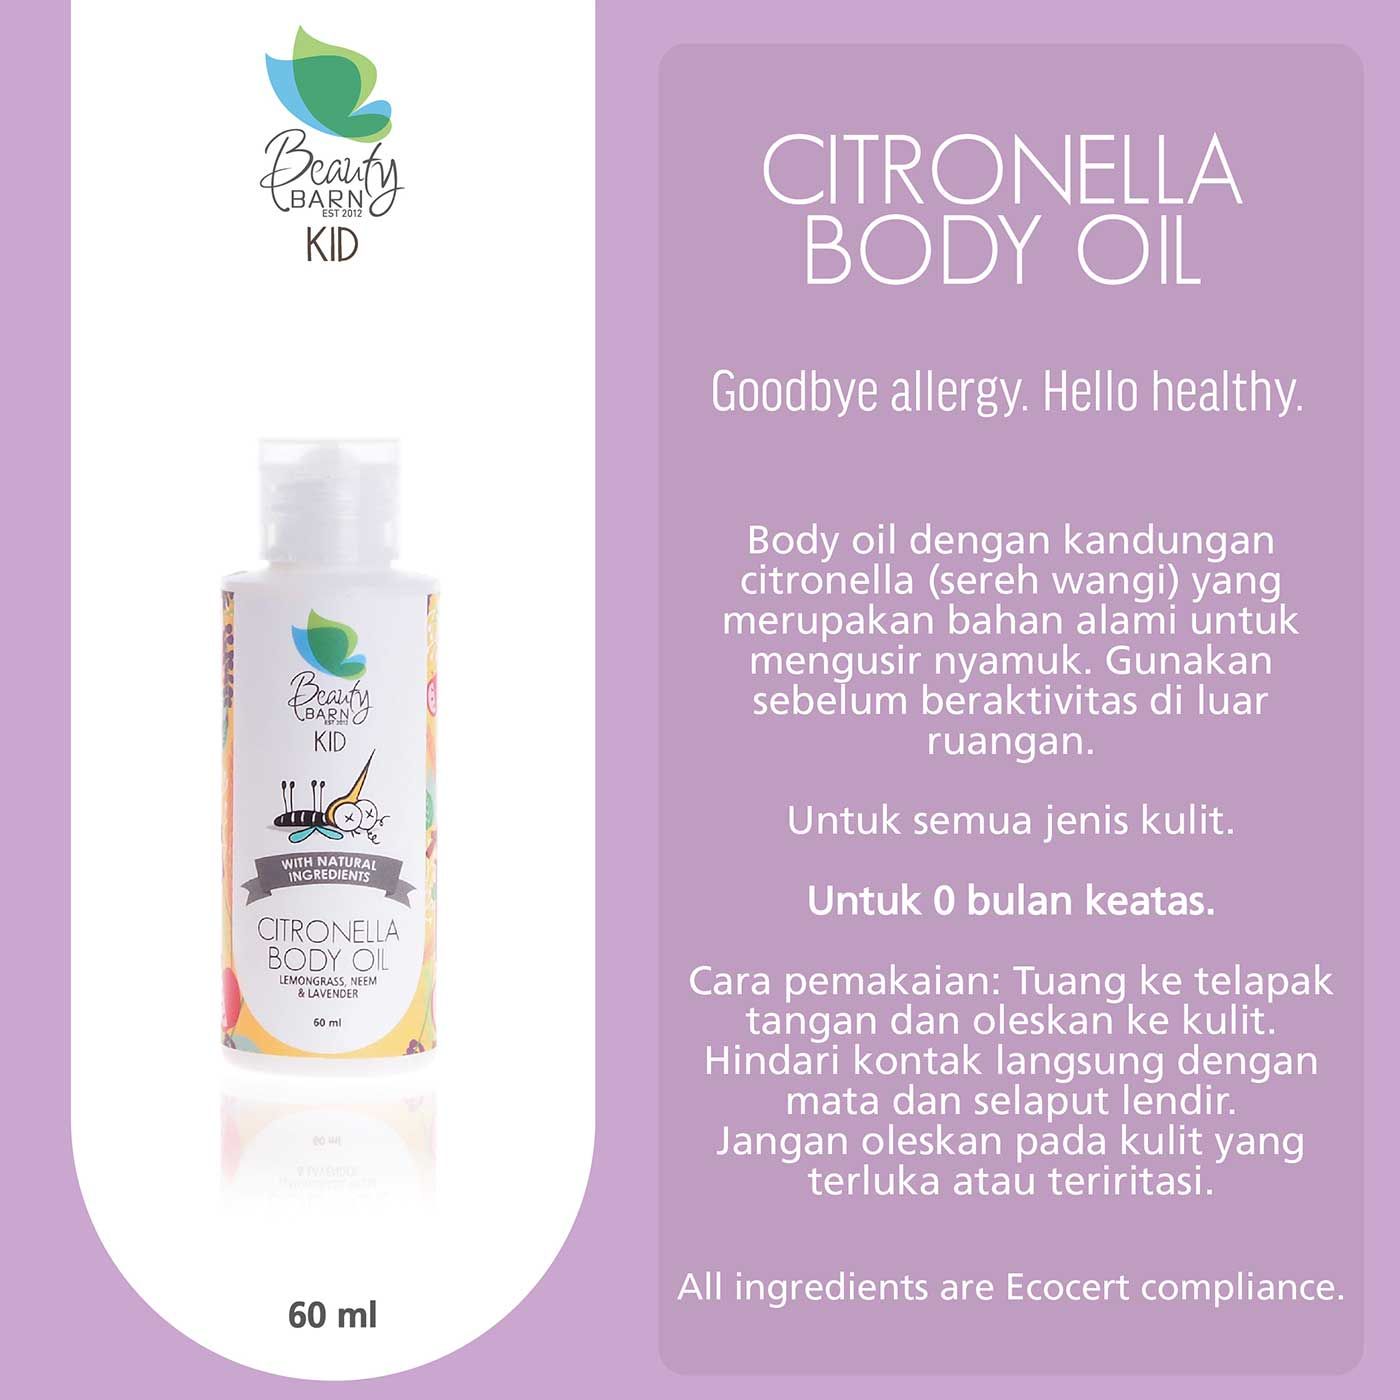 Beauty Barn Kid - Citronella Body Oil 60ml - 3